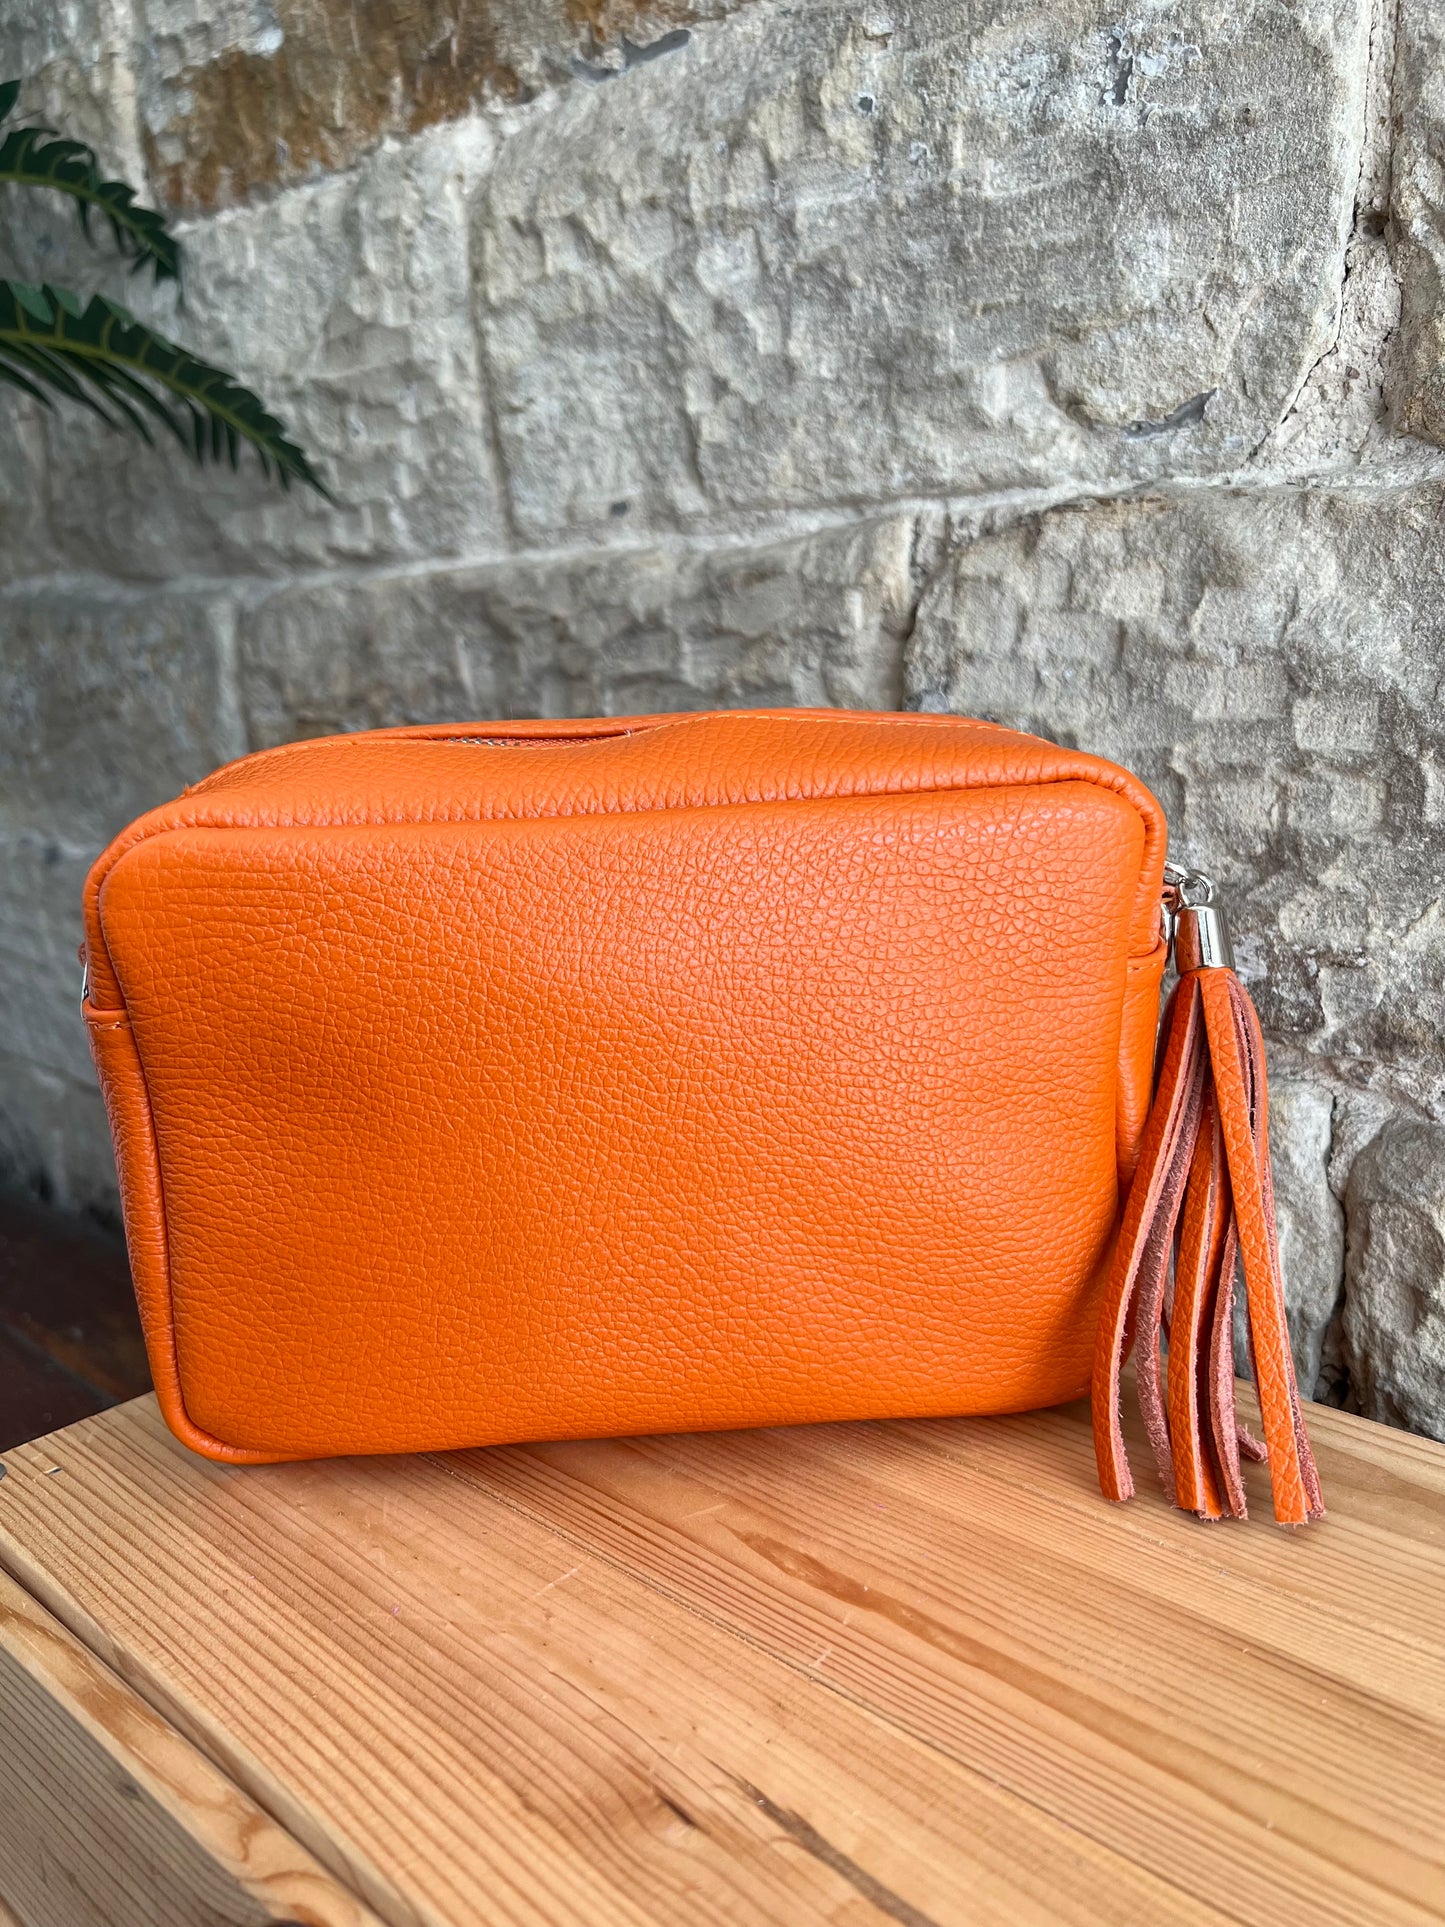 NIKKI - Leather Cross Body 'Camera' Bag with Tassels - Orange